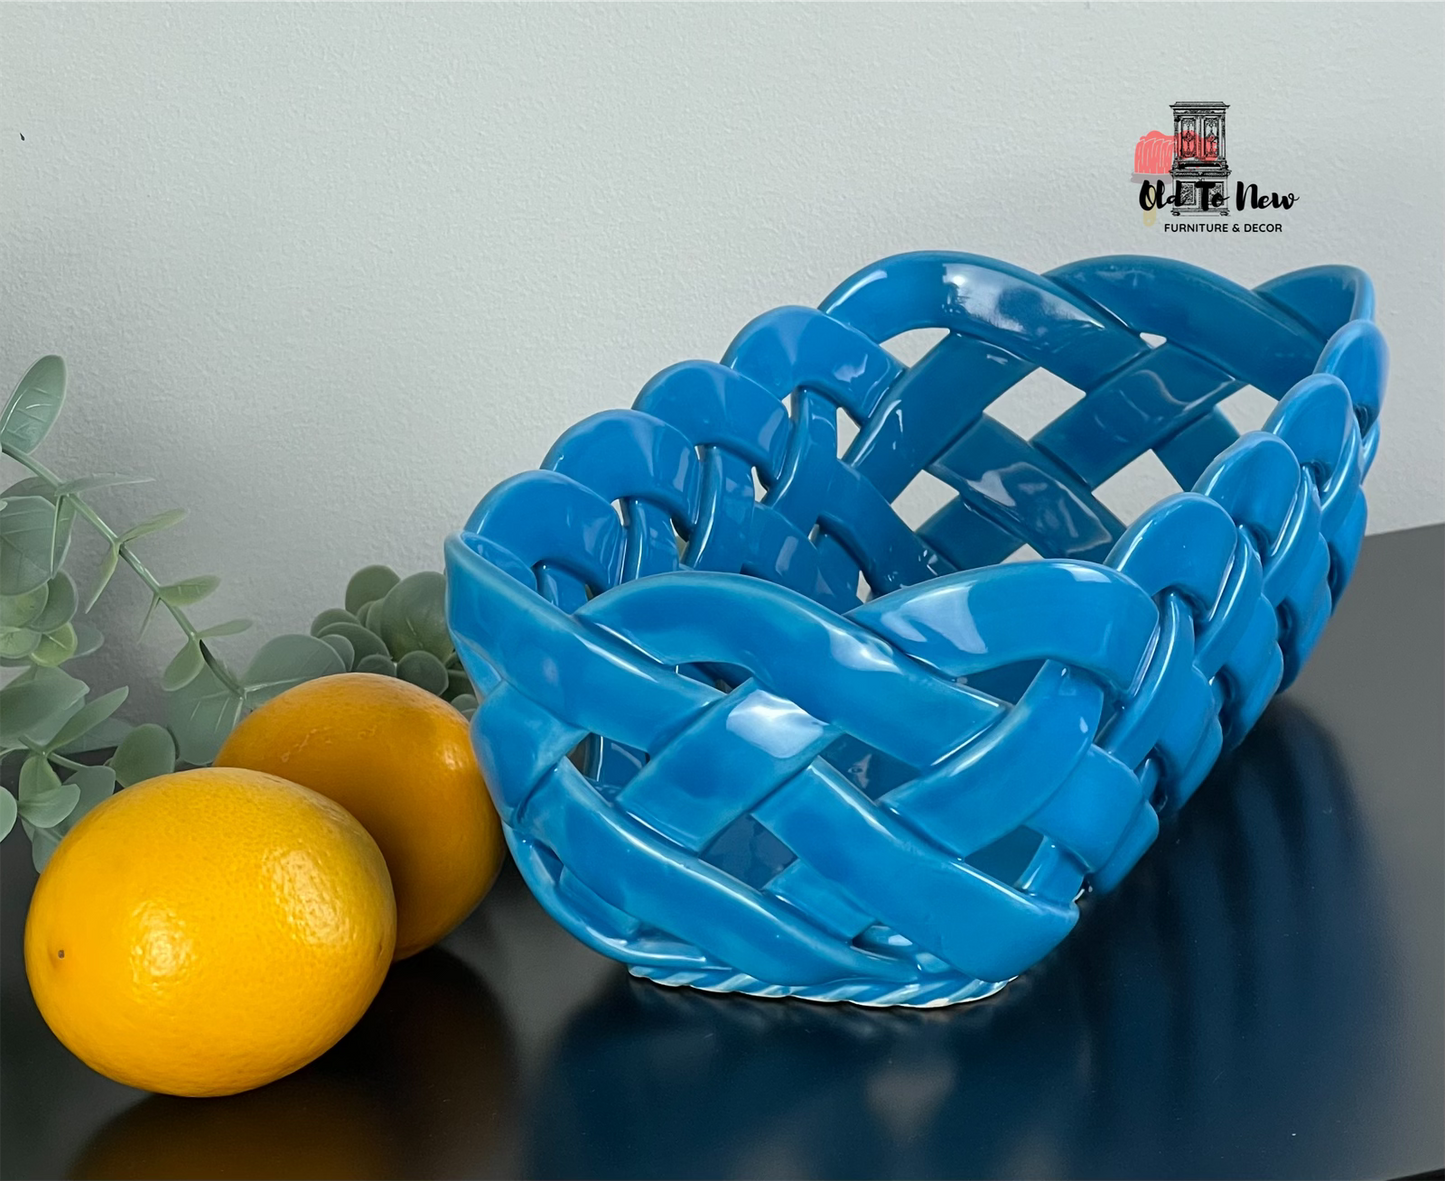 PrimoGi Ceramic Woven Basket, Fruit Basket, Home Decor, Hand Made Basket,  Old to New Furniture & Decor